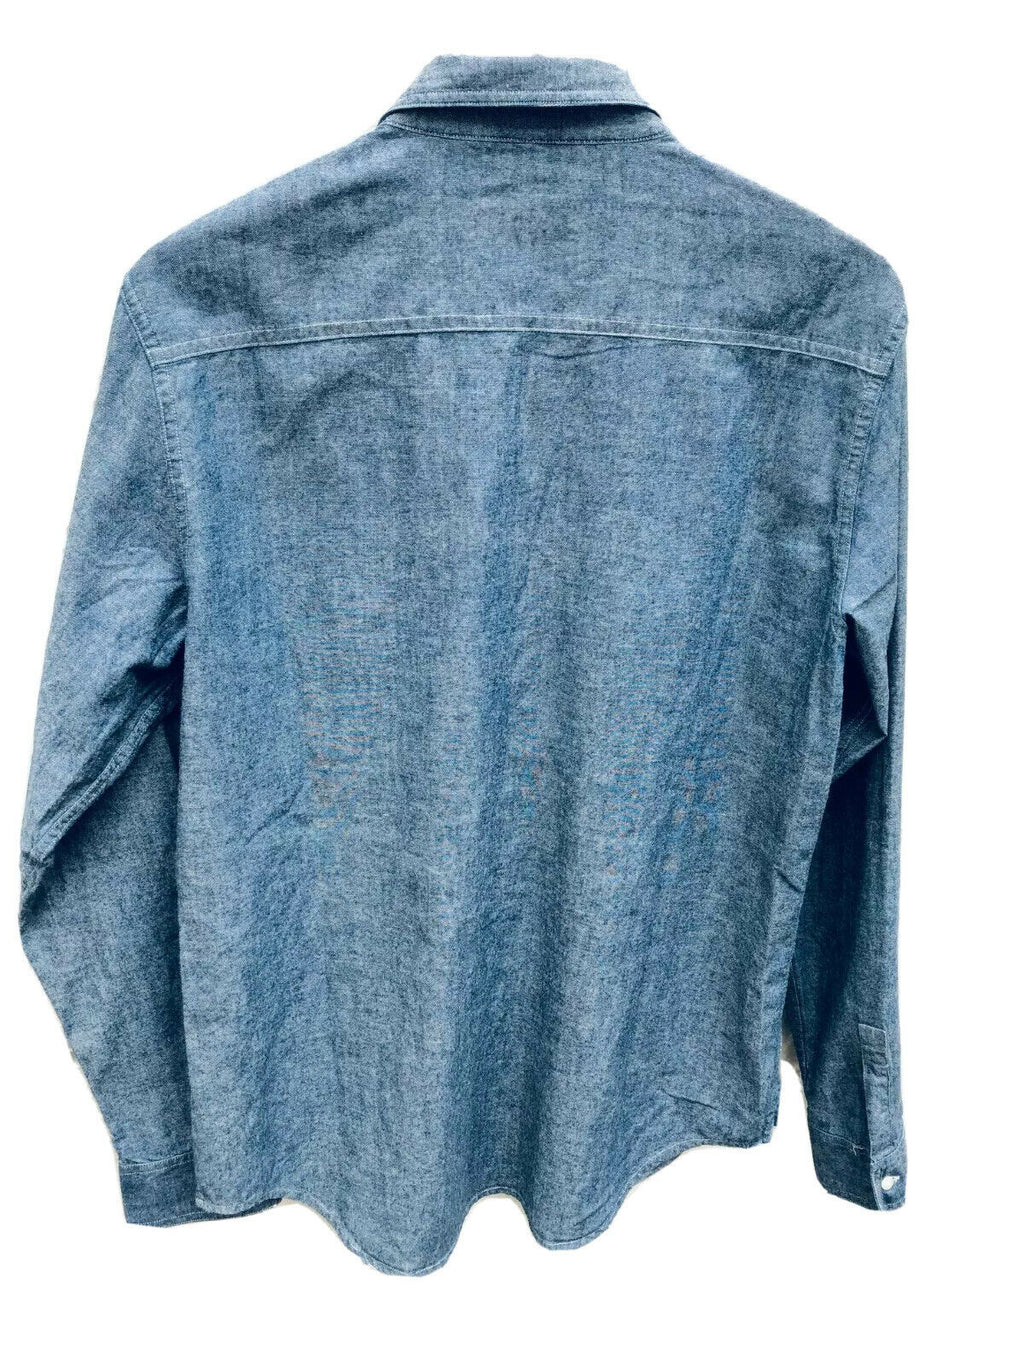 Sandro Blue Denim Shirt Size L